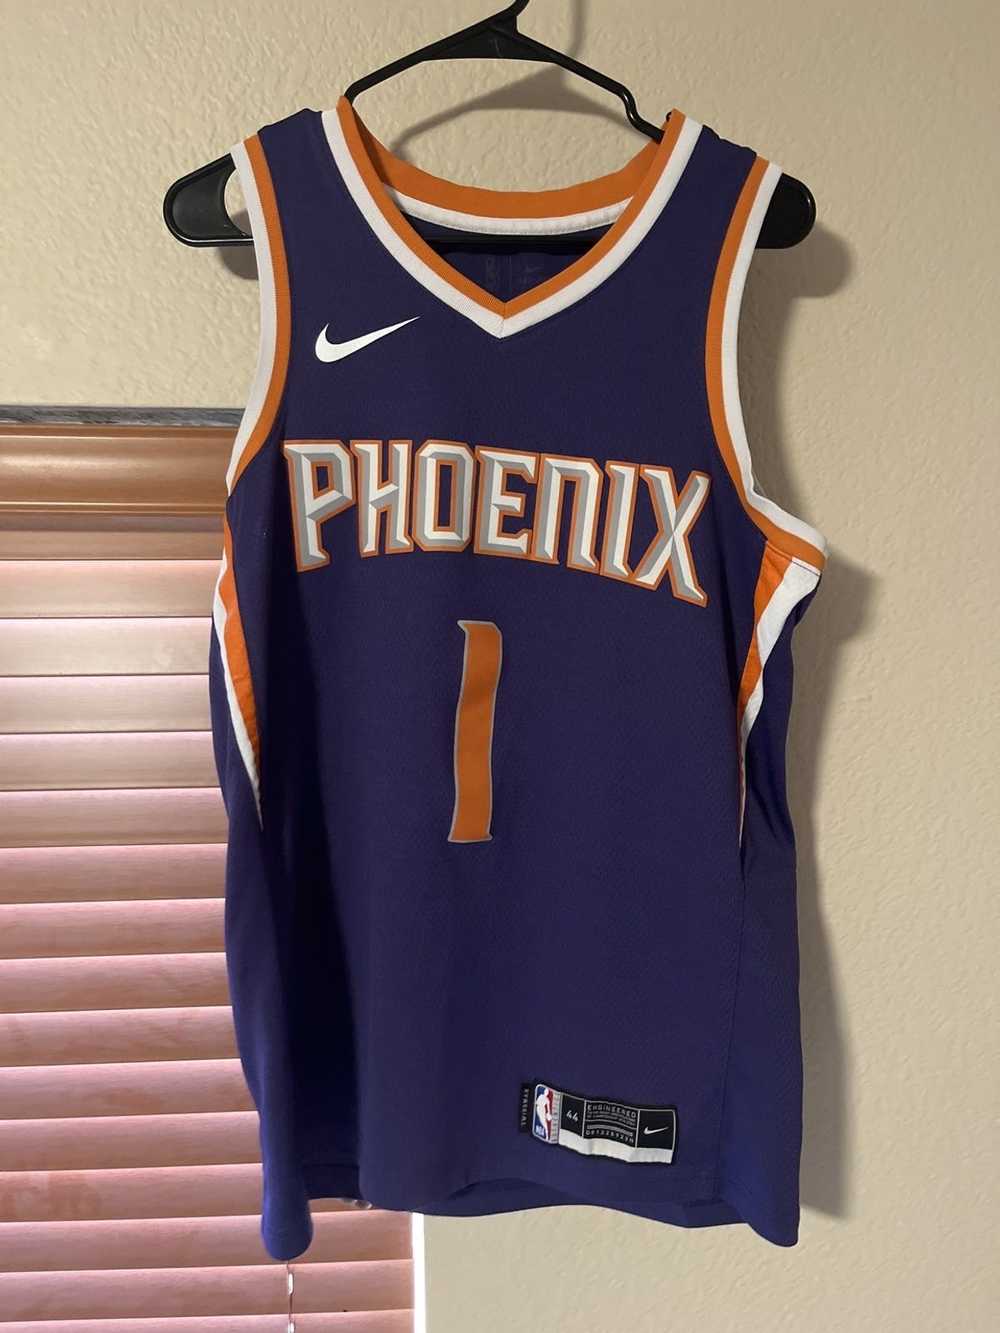 Size 48 (L) Devin Booker Phoenix Suns Valley Jersey (Black